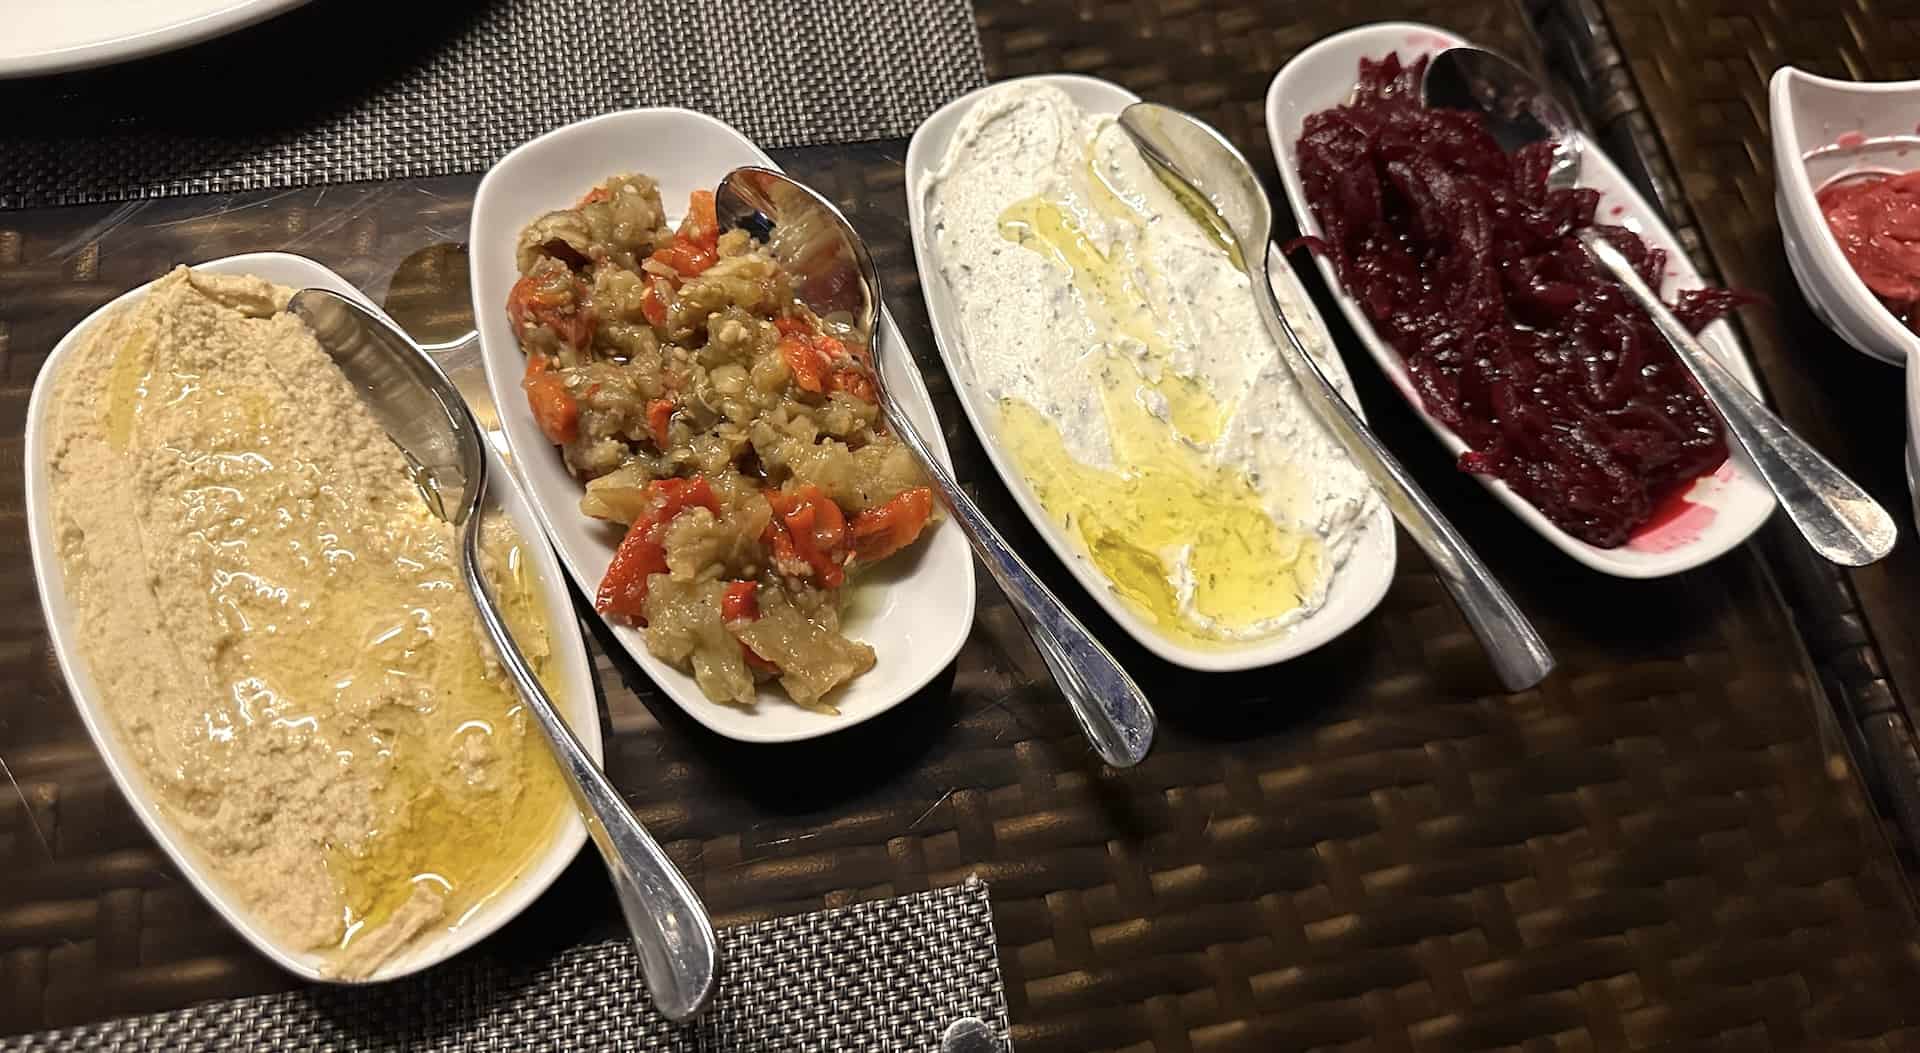 Meze sampler at Ayasoluk Restaurant in Selçuk, Turkey